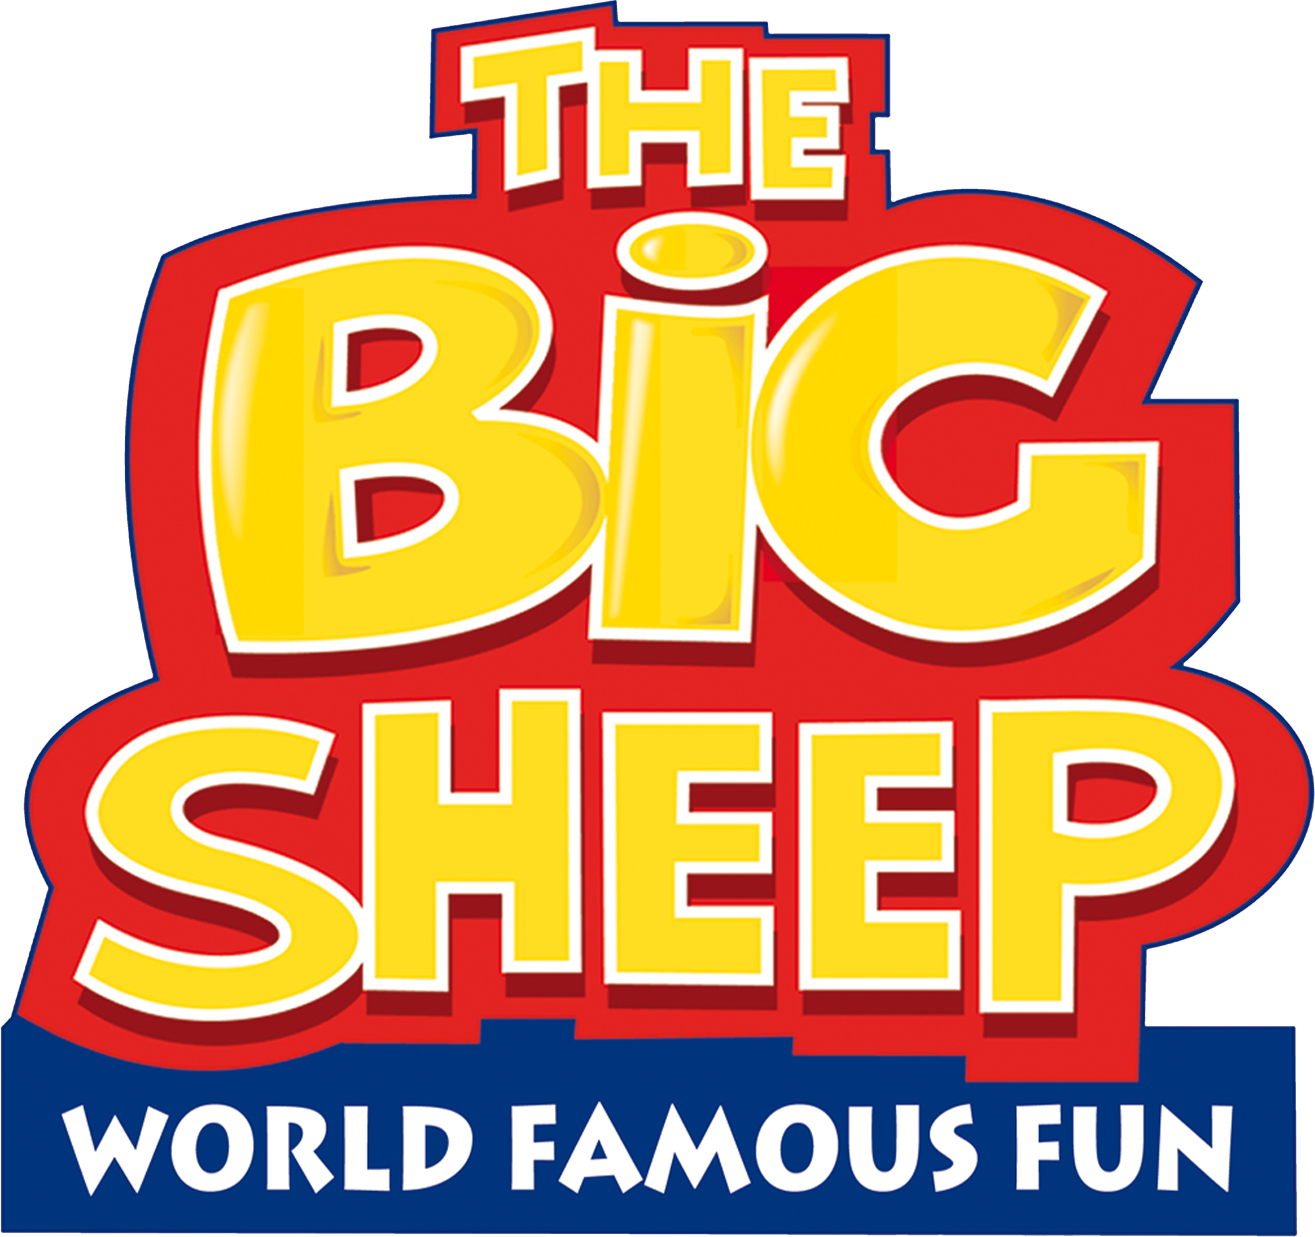 The Big Sheep